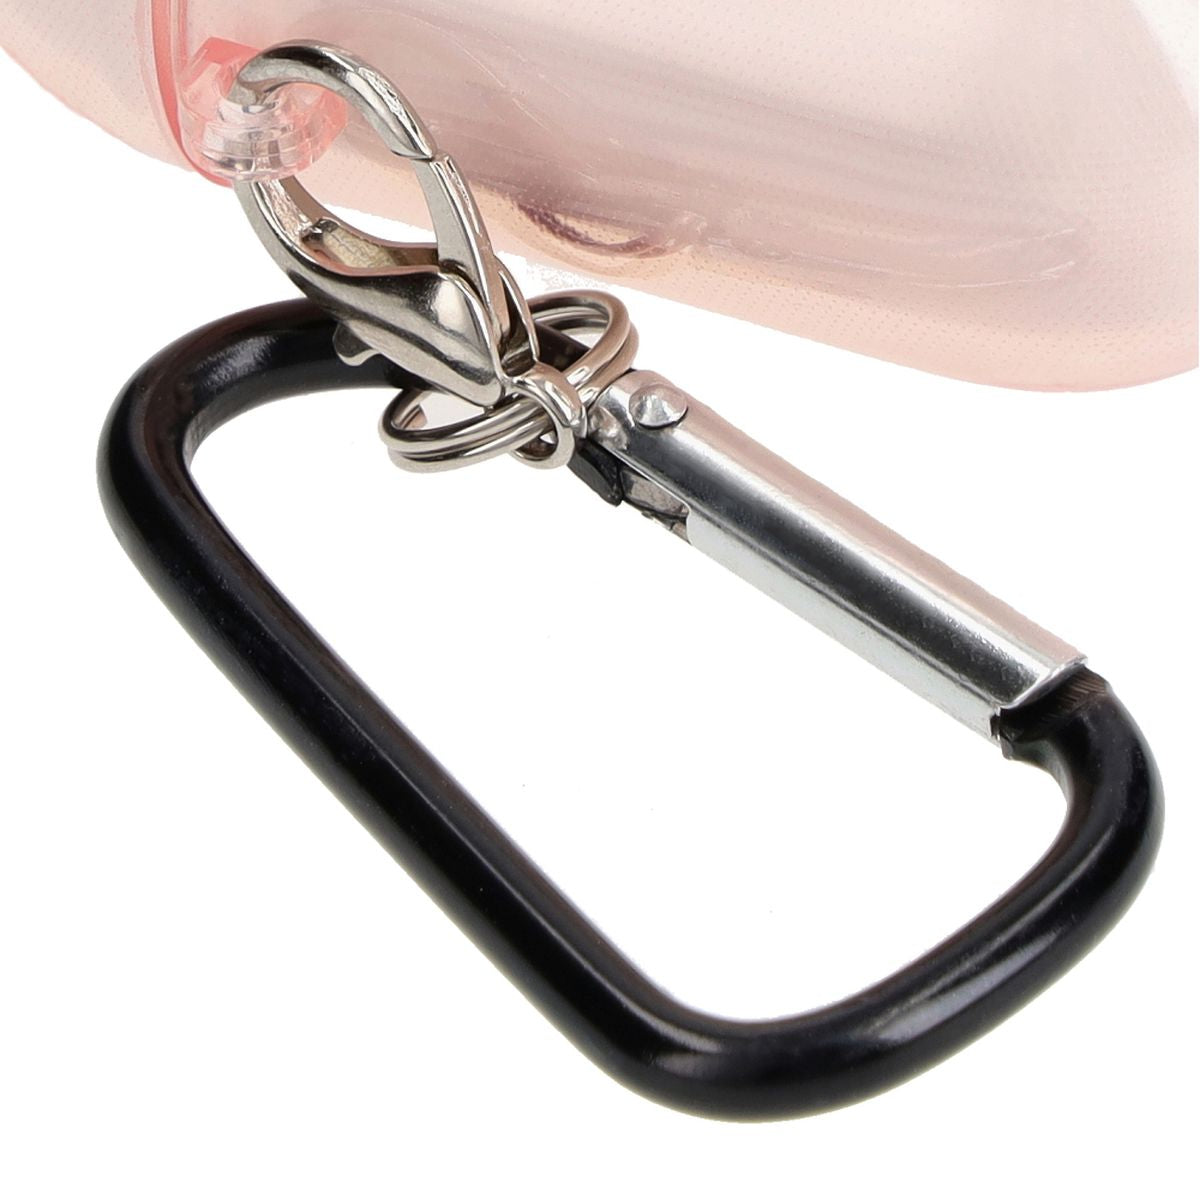 Schutzhülle für Apple AirPods 1/2, Bizon Case Headphone Clear, Transparent-Rosa